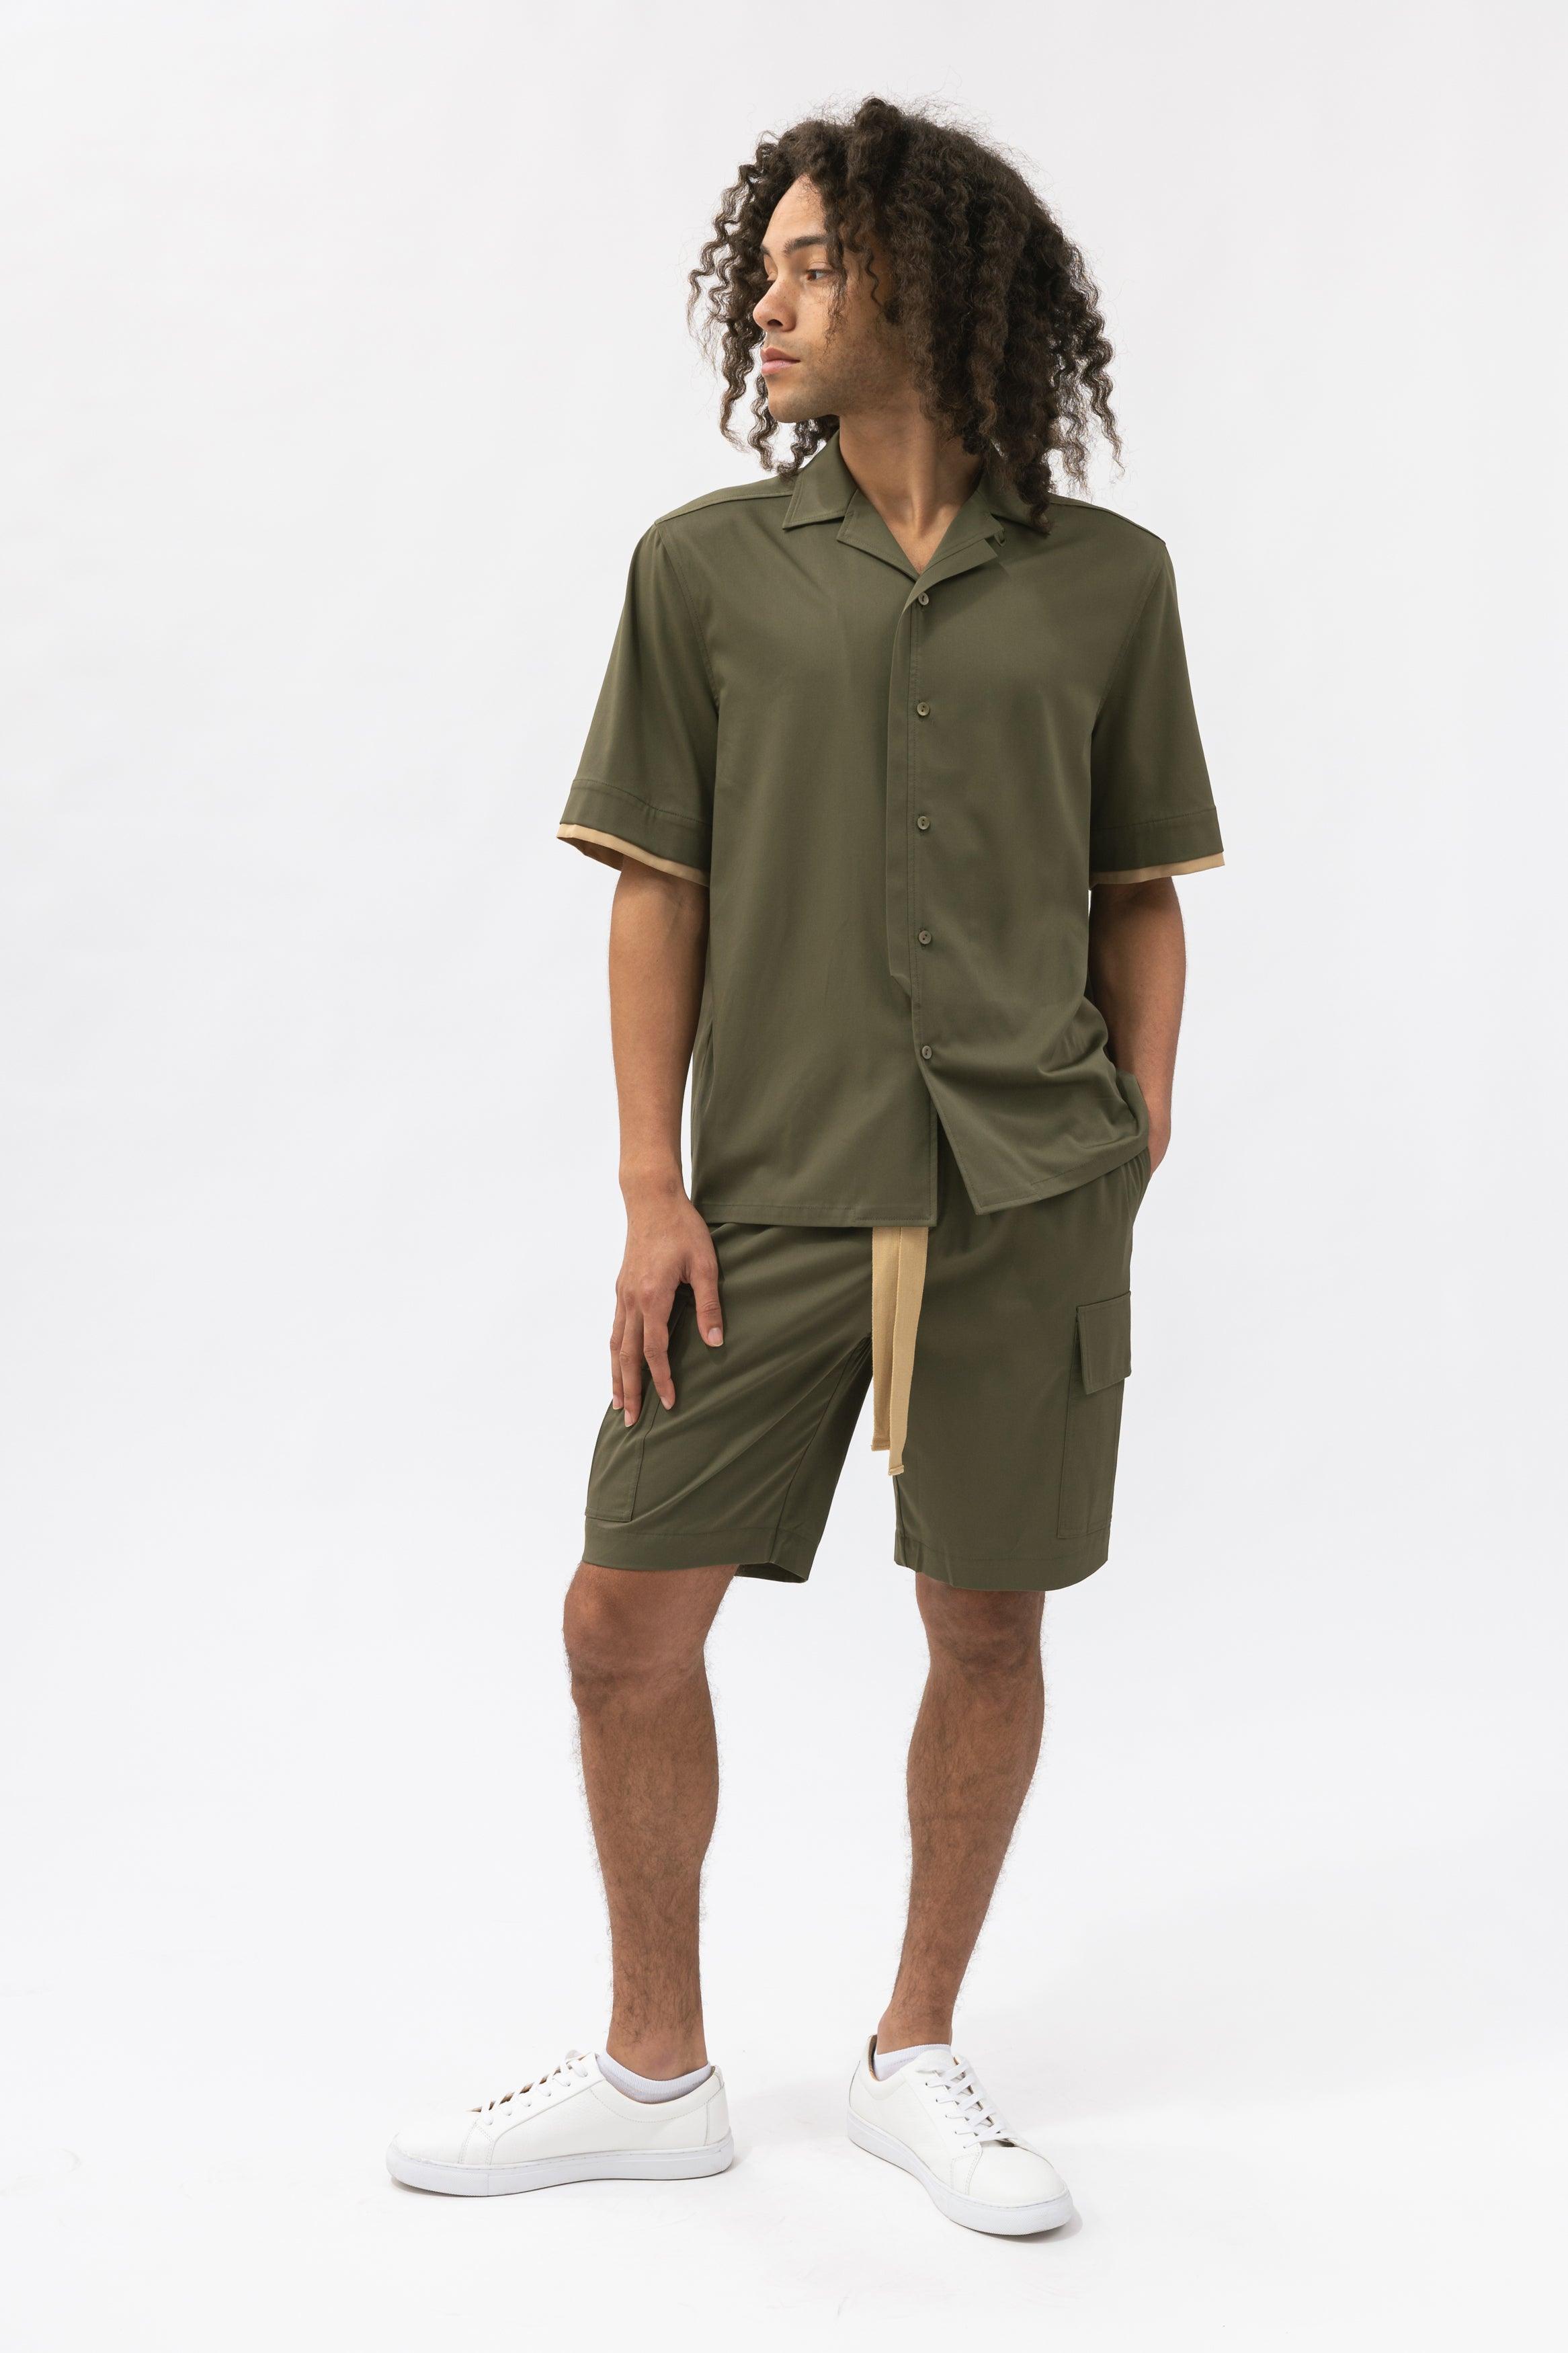 Men's Short Sleeve Safari Shirts | Mens Shirts | Not Labeled White x Navy / S